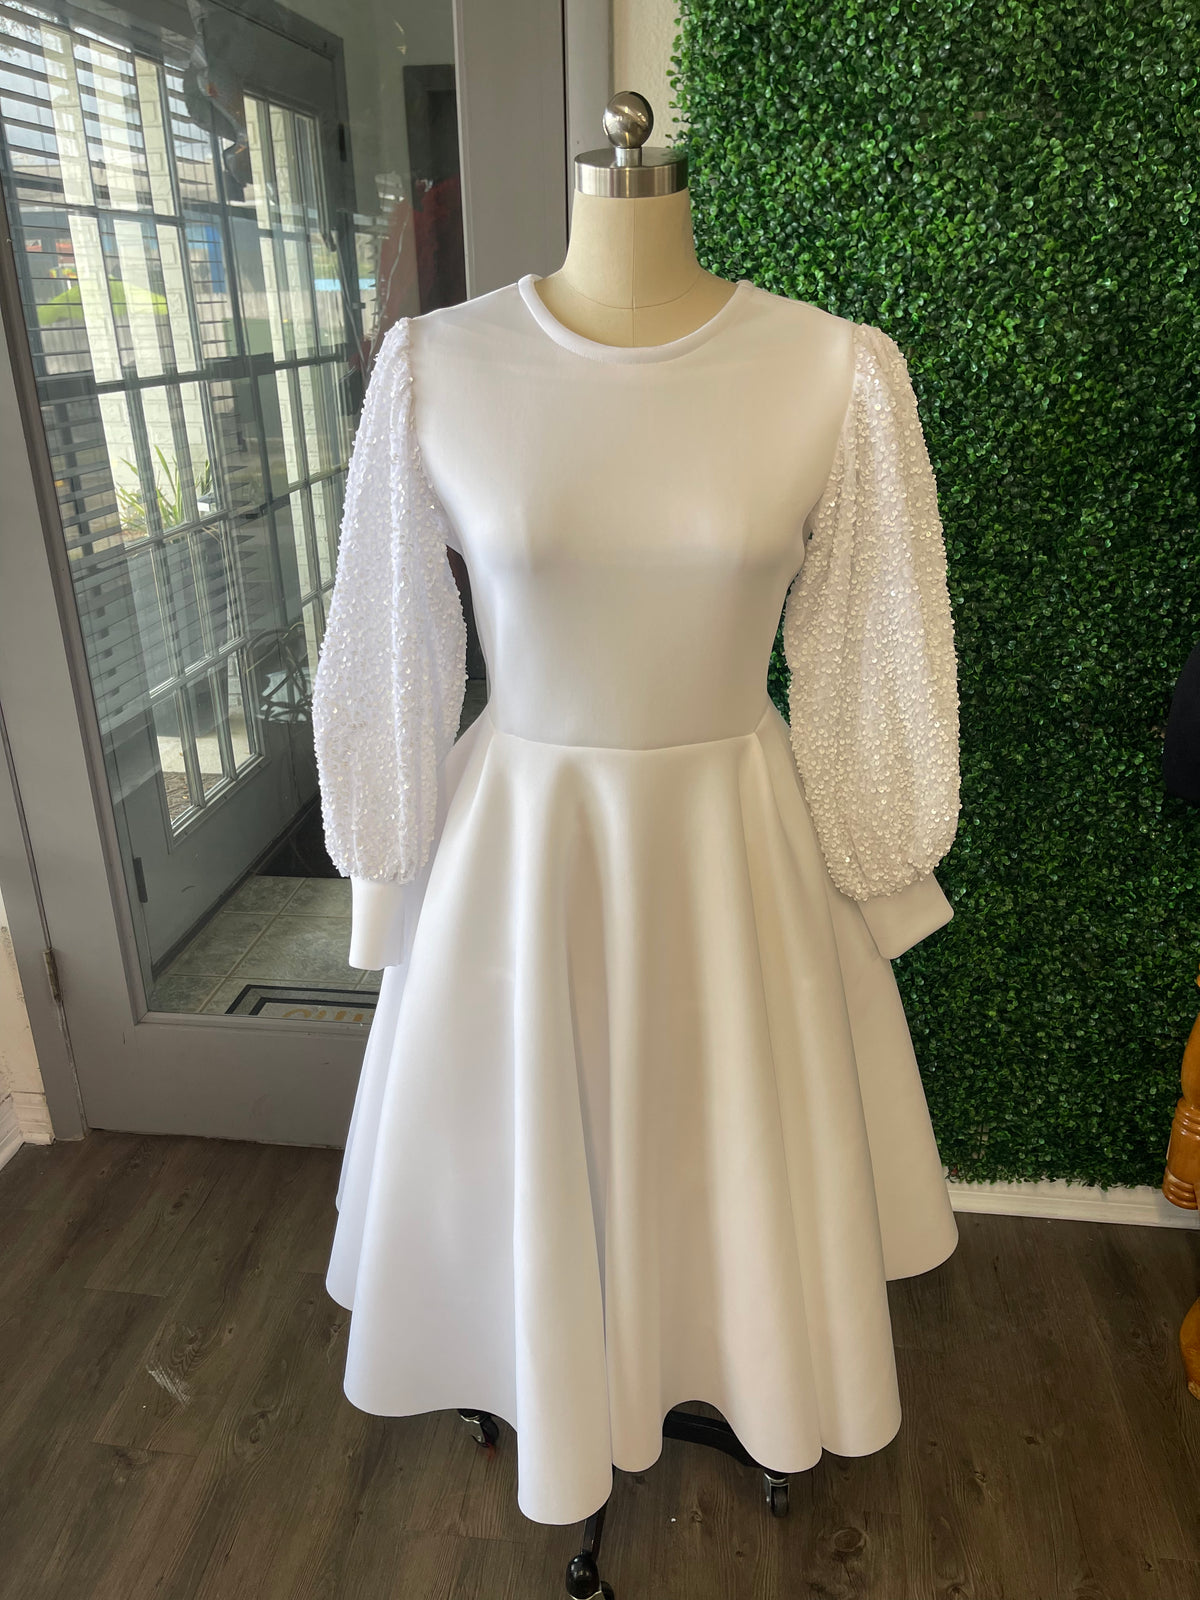 White swing dress